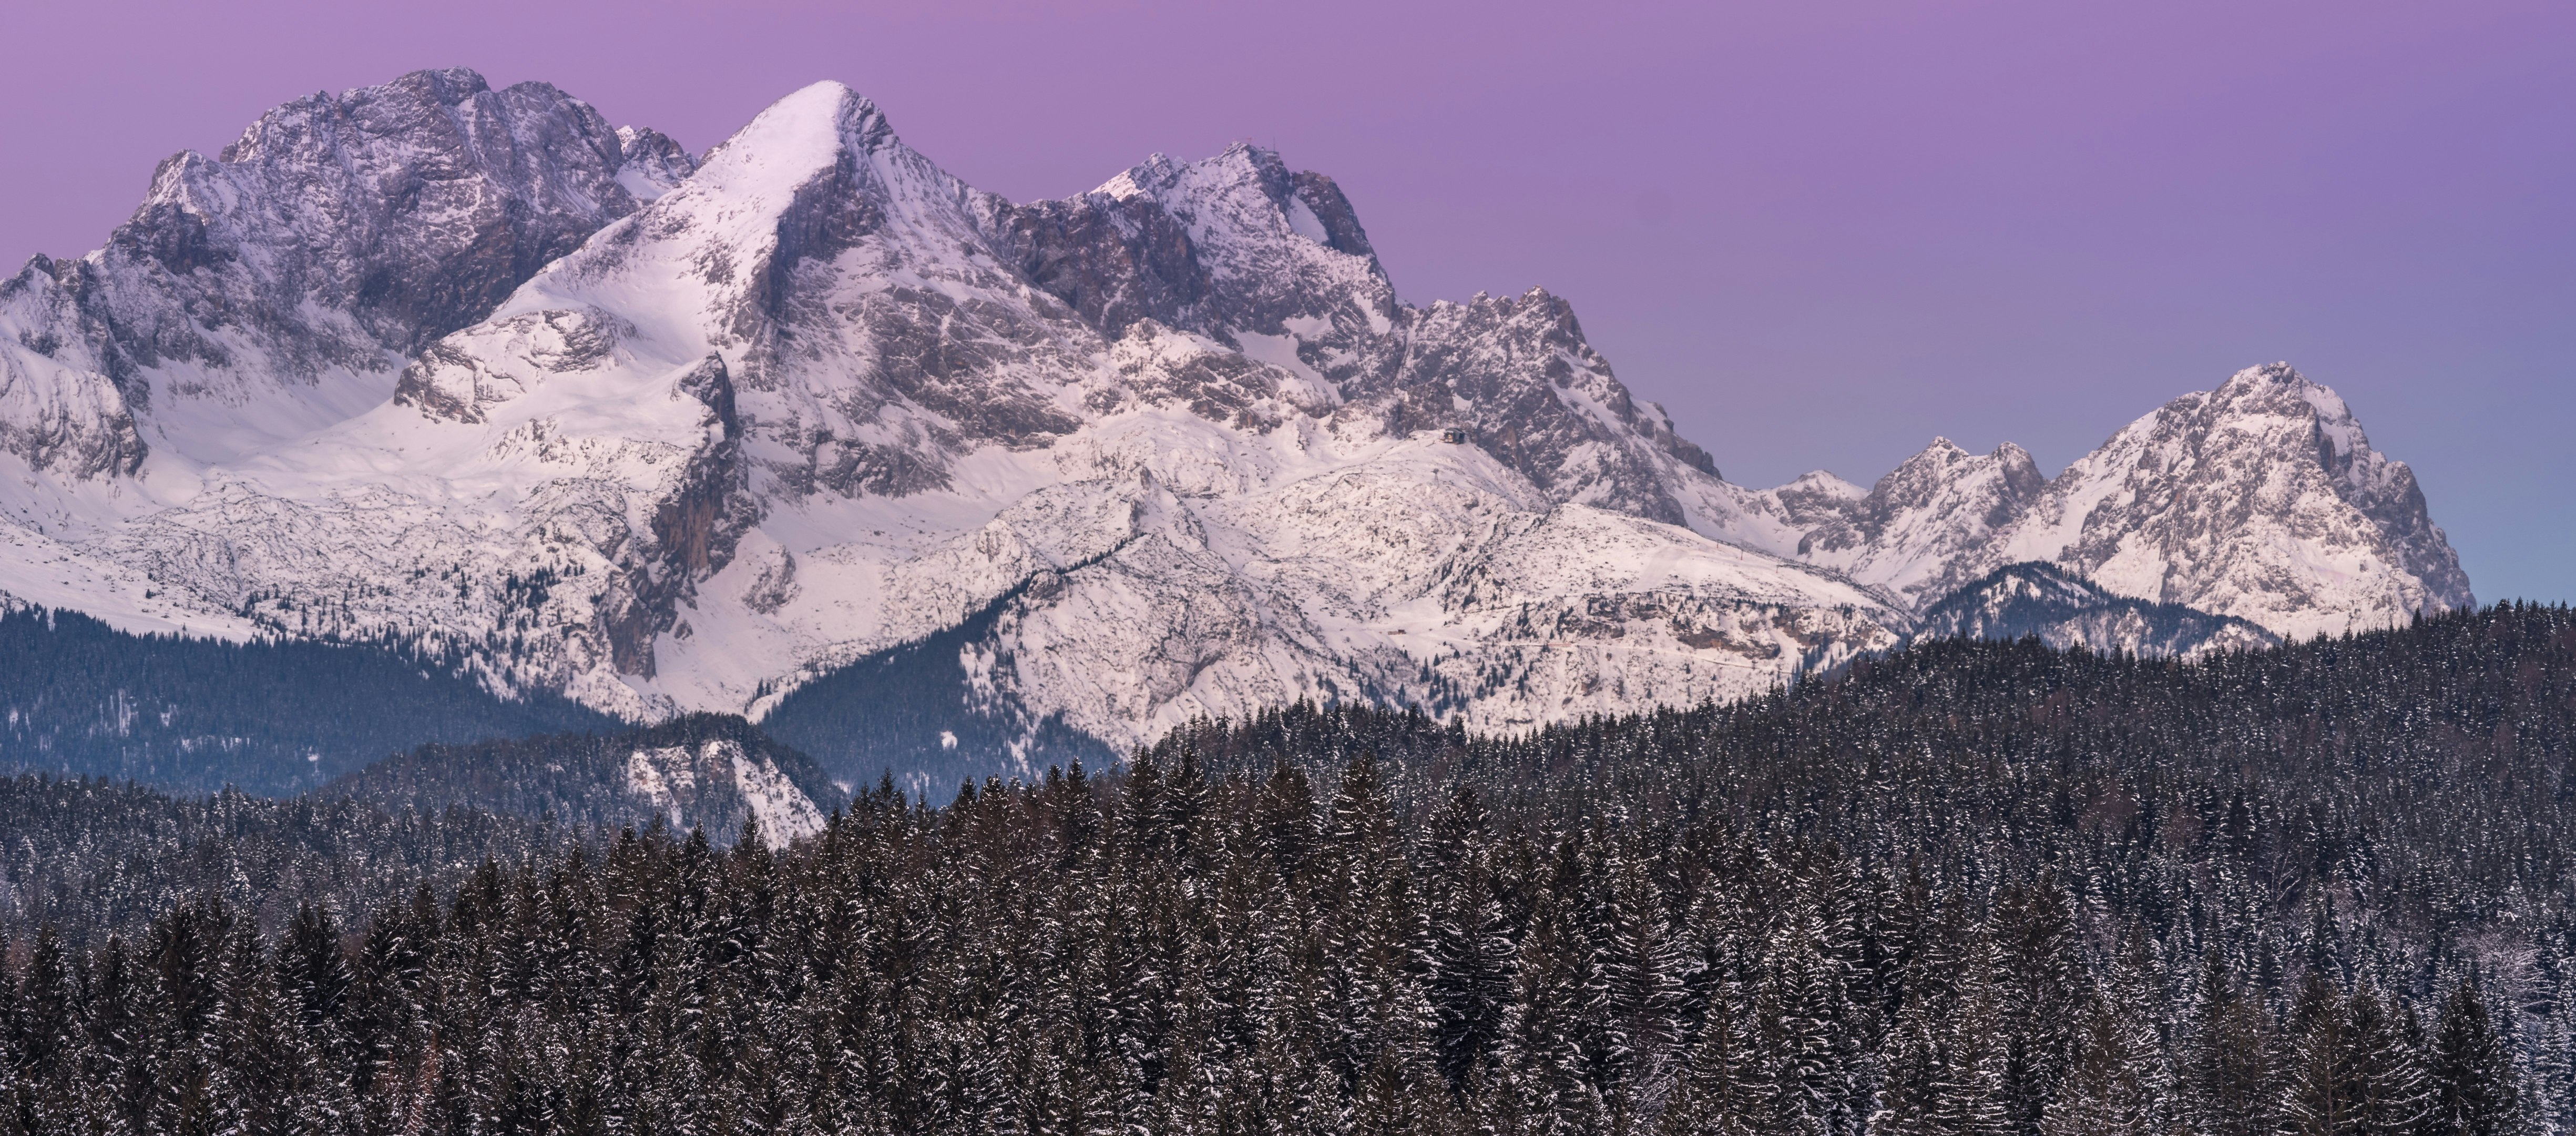 landscape photography mountain alps